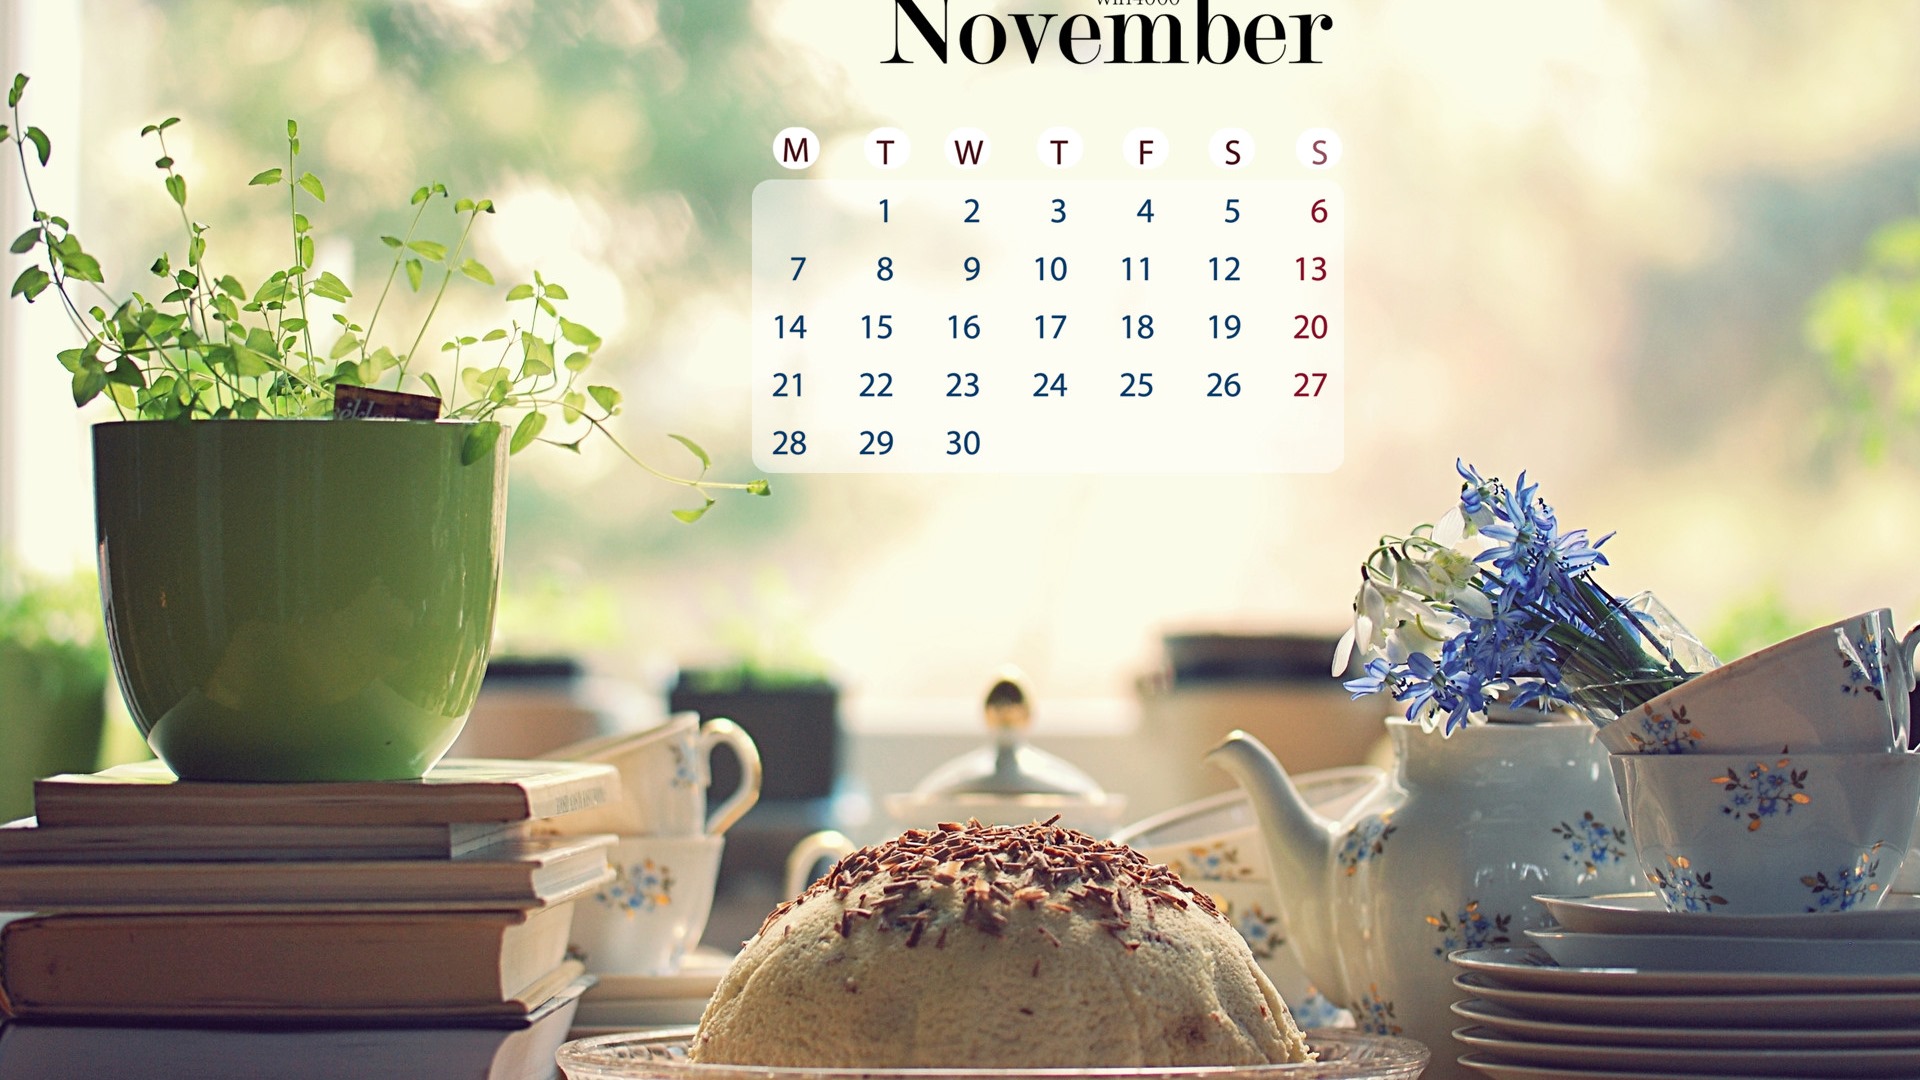 November 2016 calendar wallpaper (1) #18 - 1920x1080